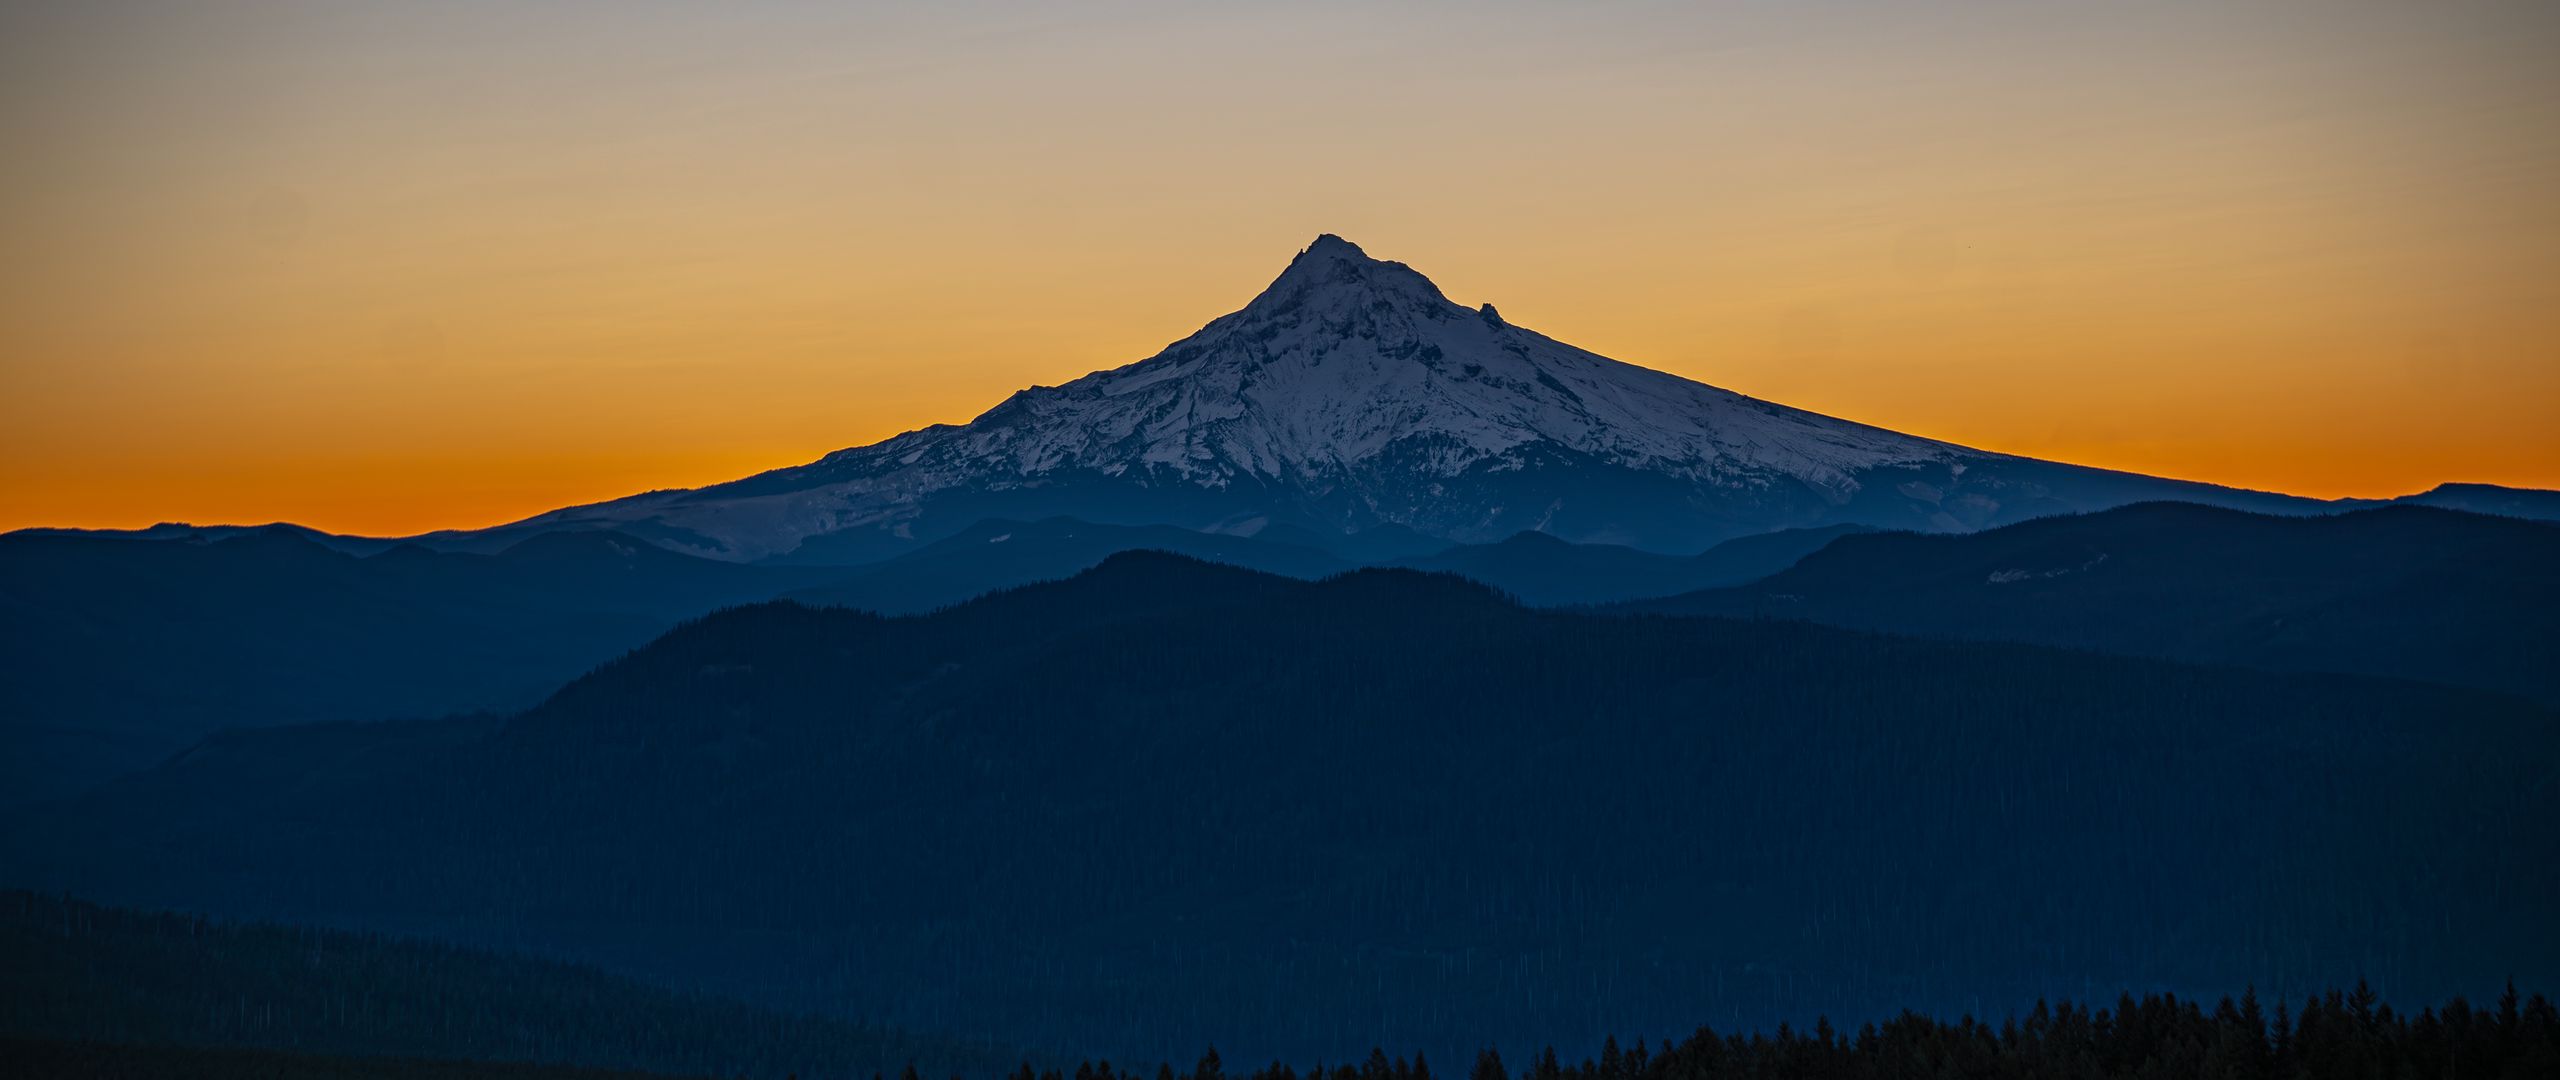 Download wallpaper 2560x1080 mountain, peak, snow, dawn, landscape dual ...